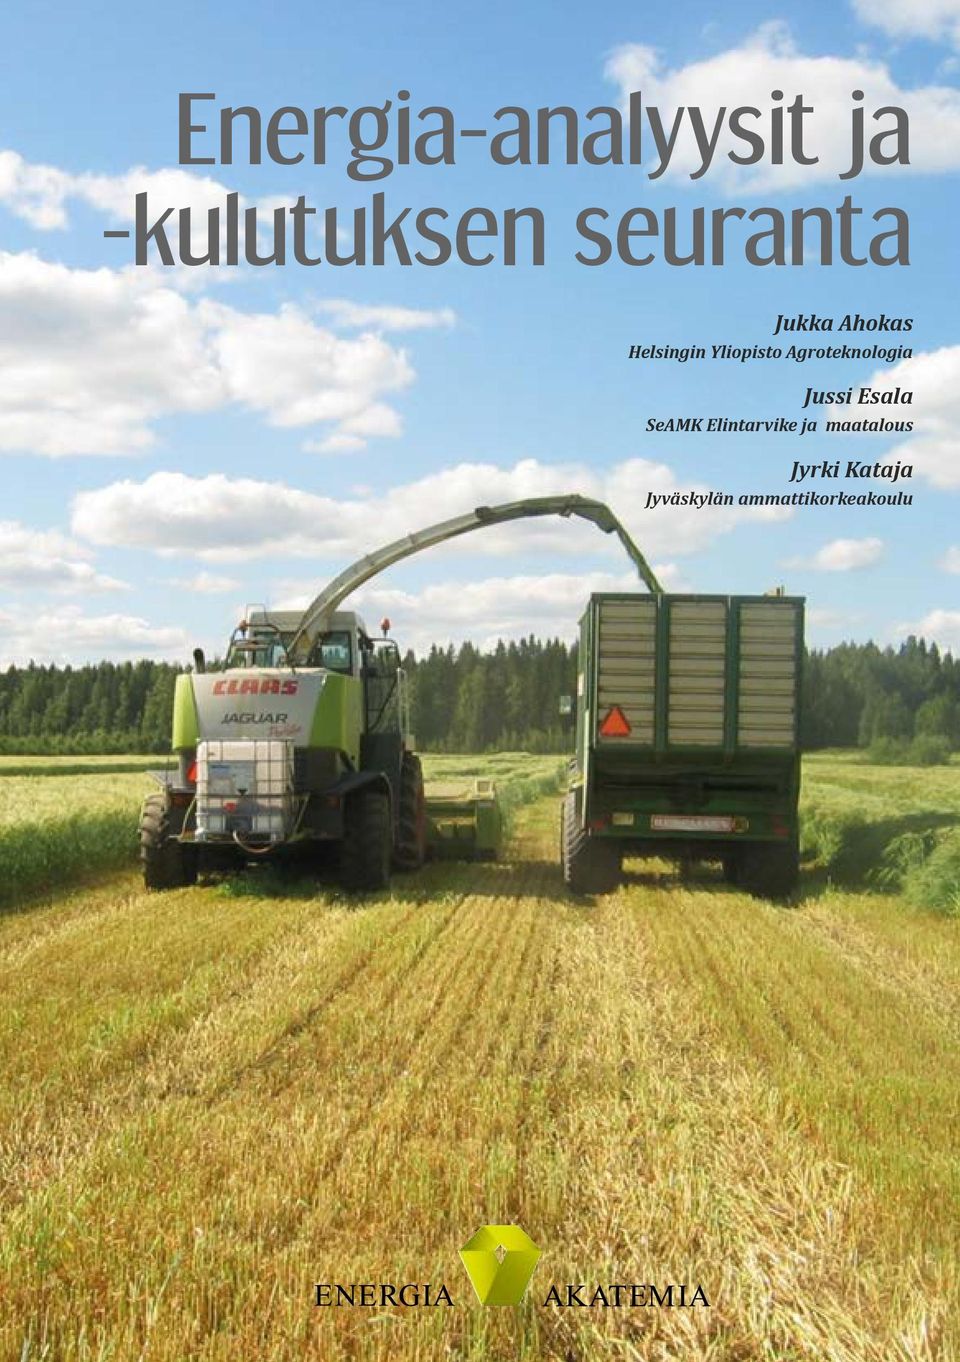 Agroteknologia Jussi Esala SeAMK